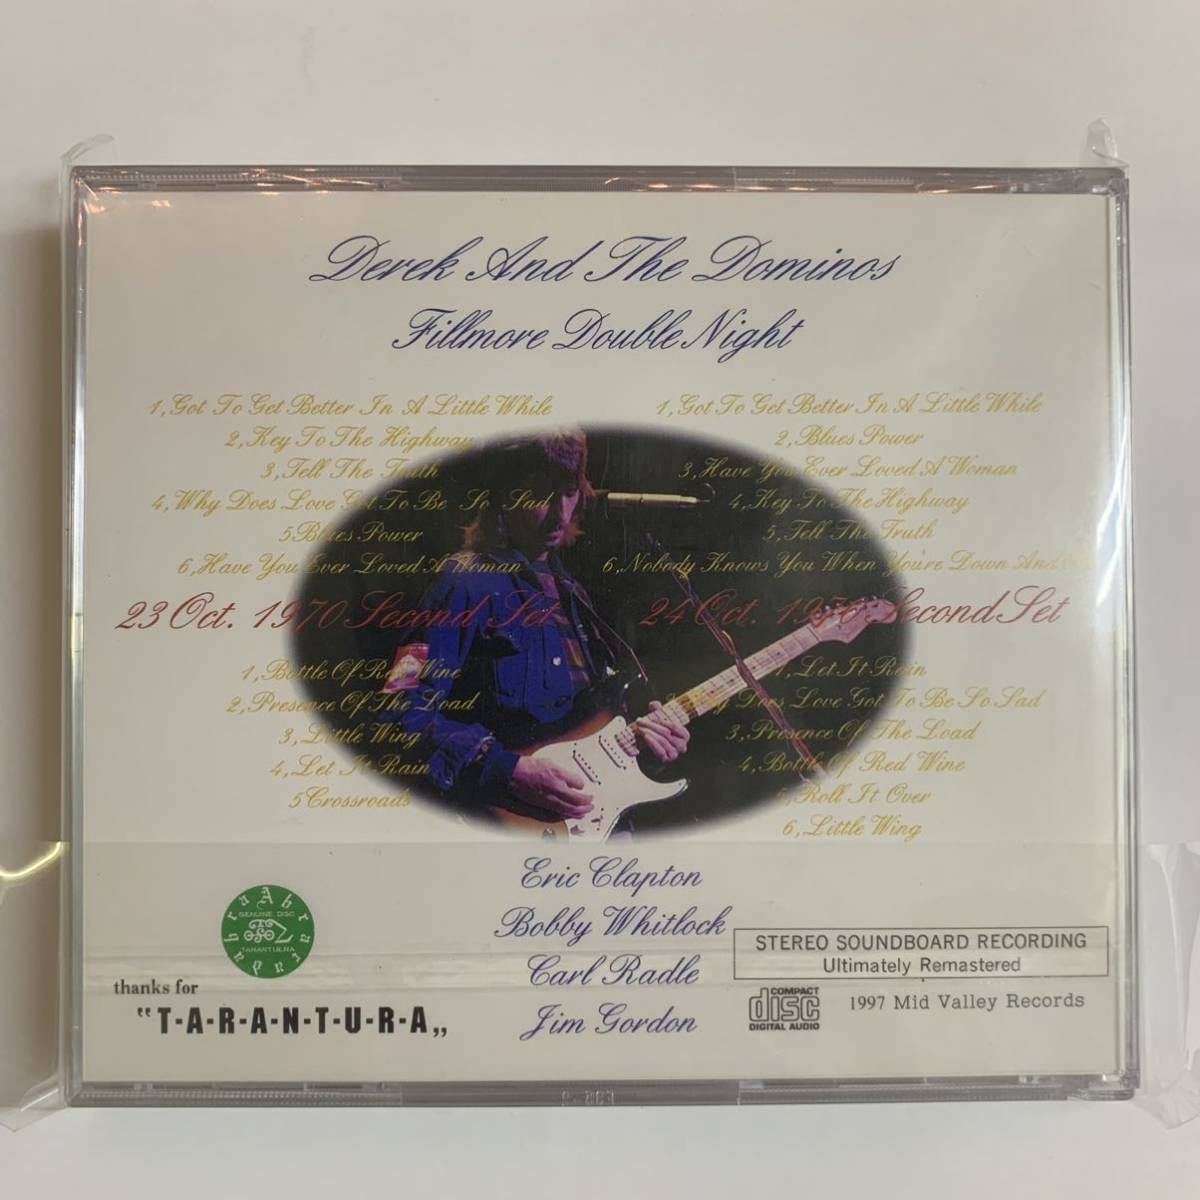 DEREK AMD THE DOMINOS / FILLMORE CONCERT 50周年記念盤 Original Jewel Case P-romo Edition 4CD Very Rare!!!!